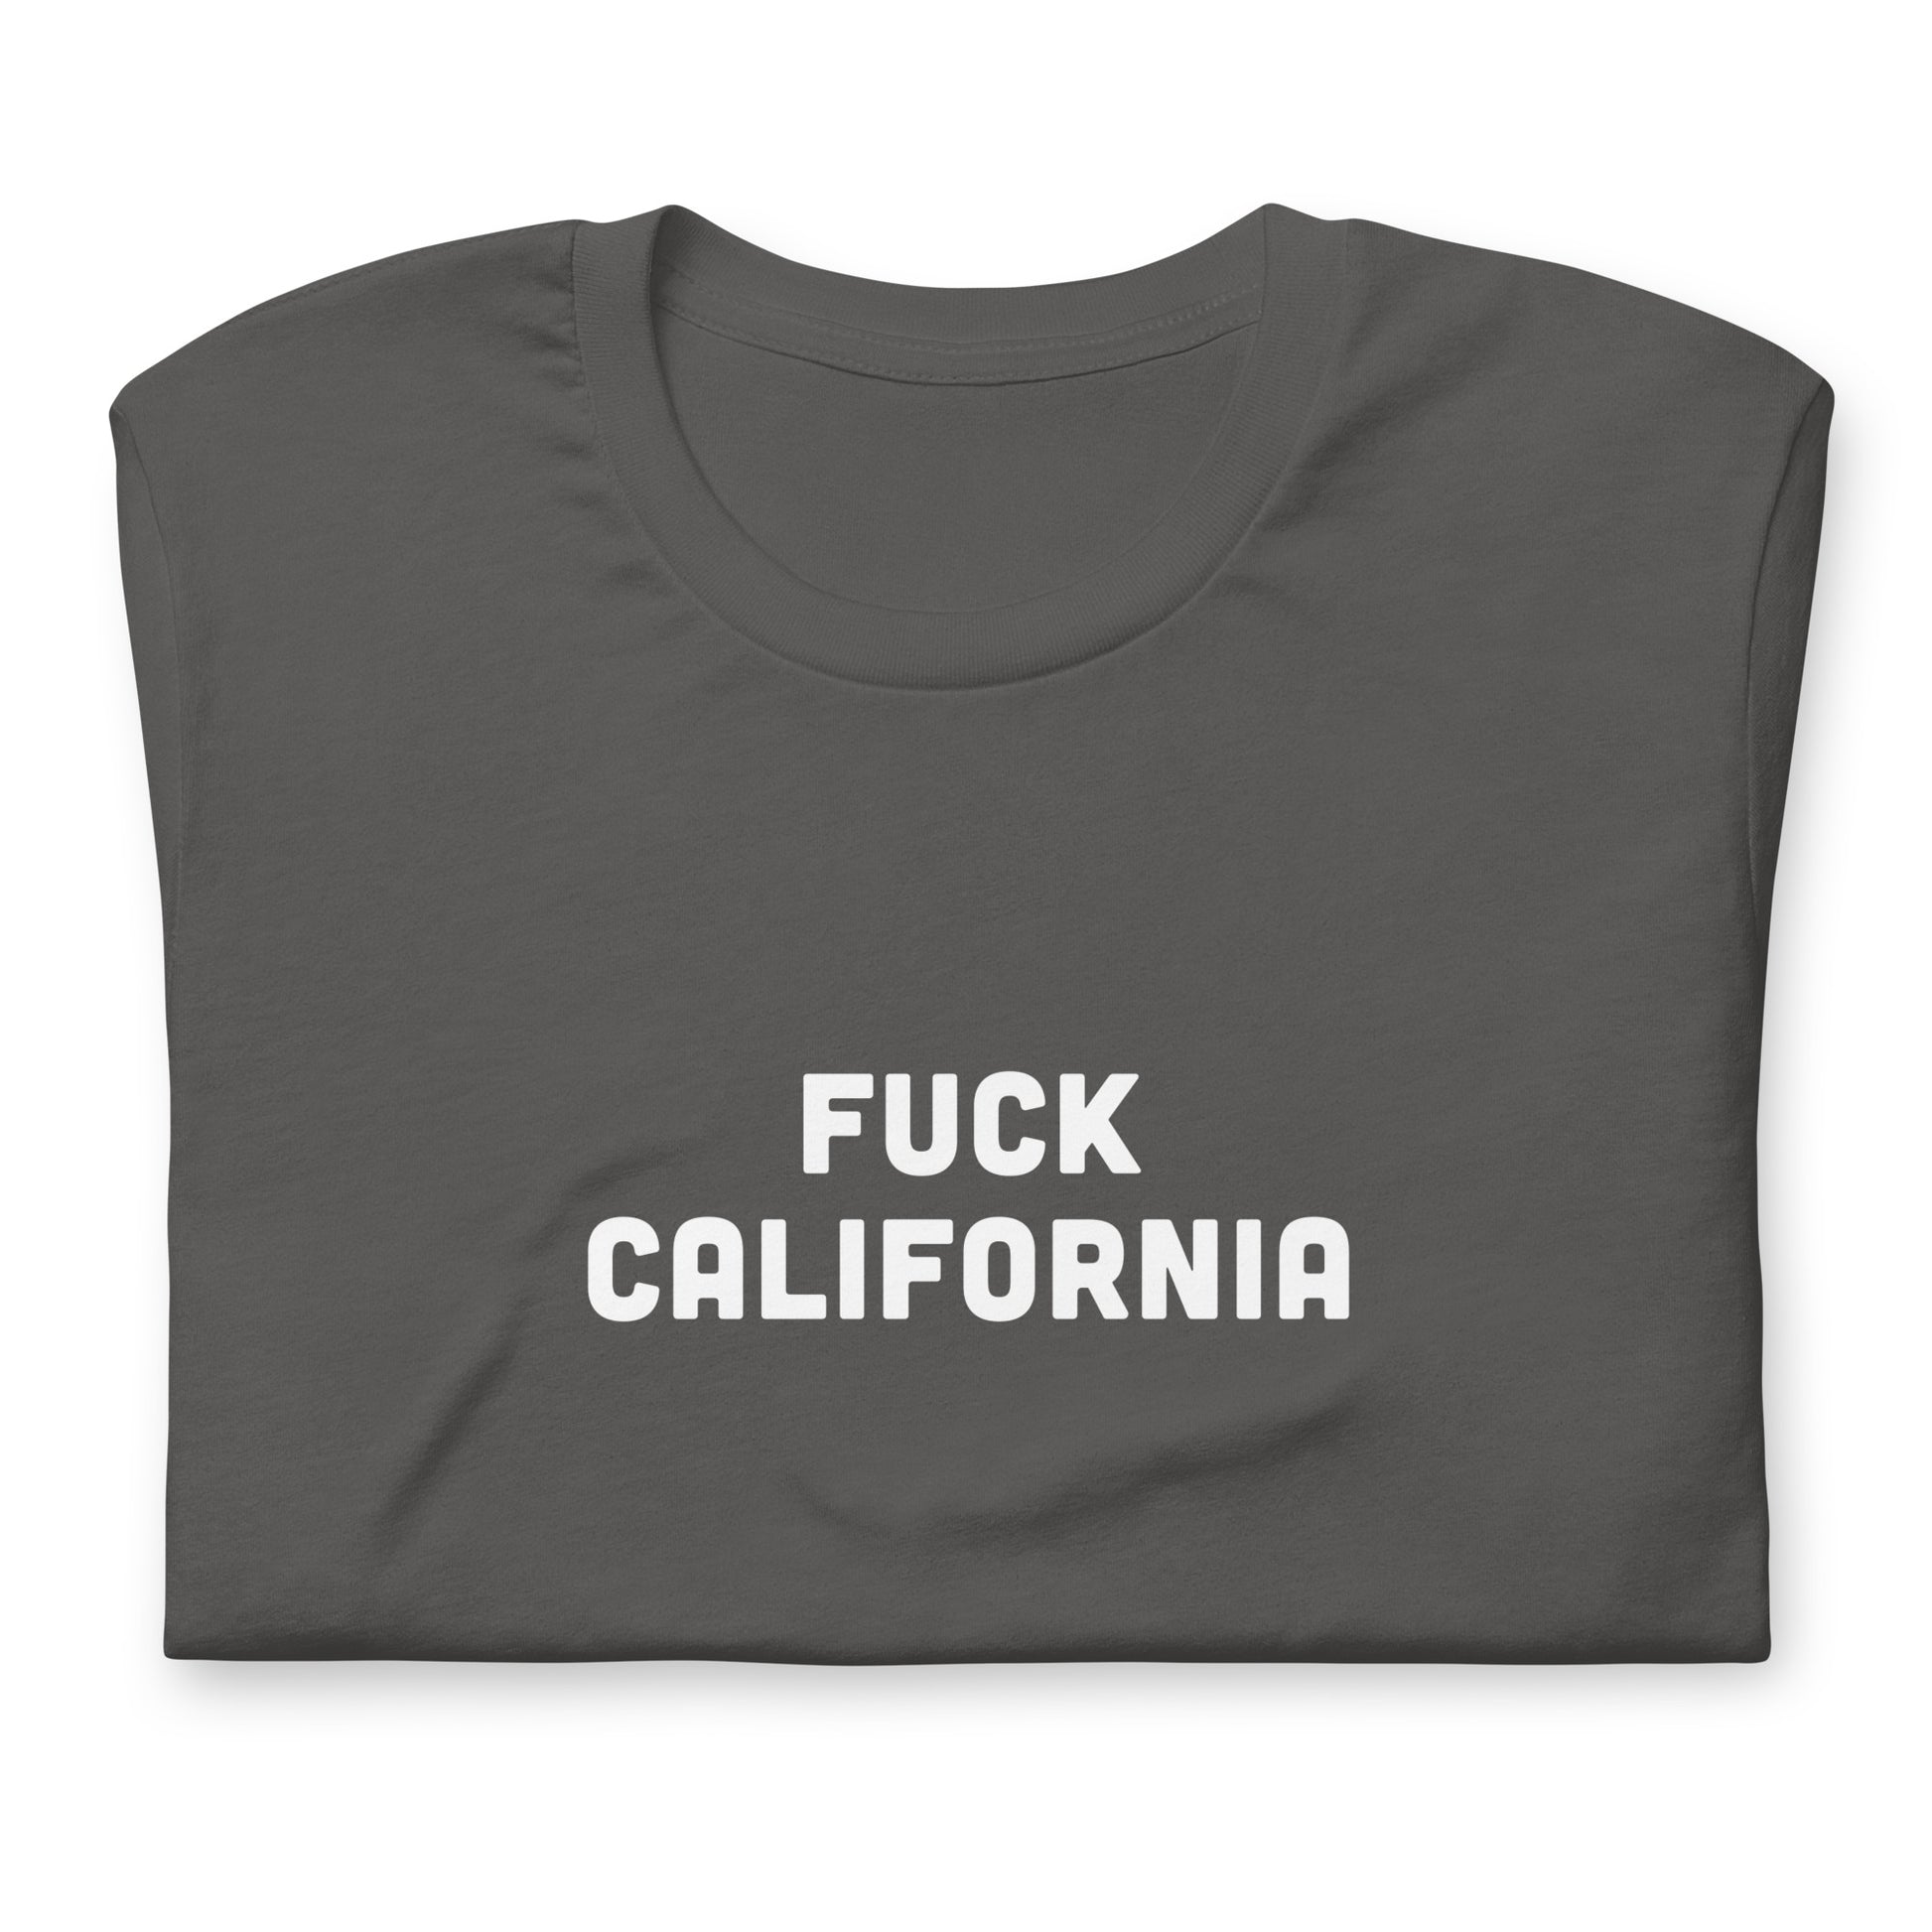 Fuck California T-Shirt Size 2XL Color Black